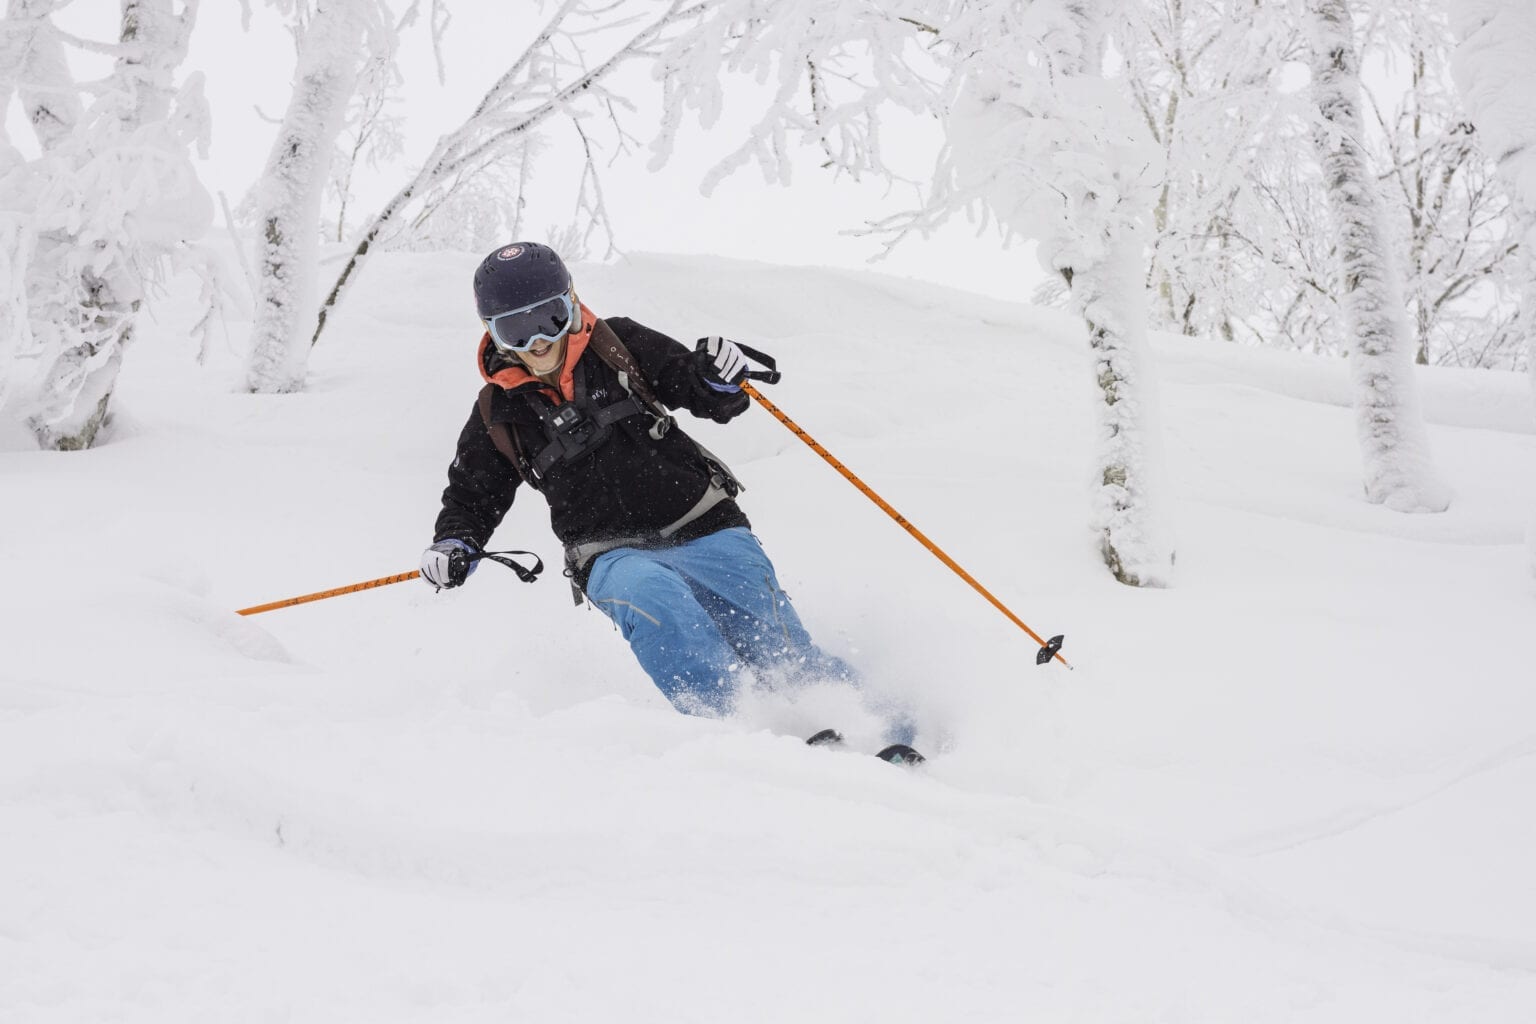 Hilary with big smile backcountry skiing in Rusutsu Japan